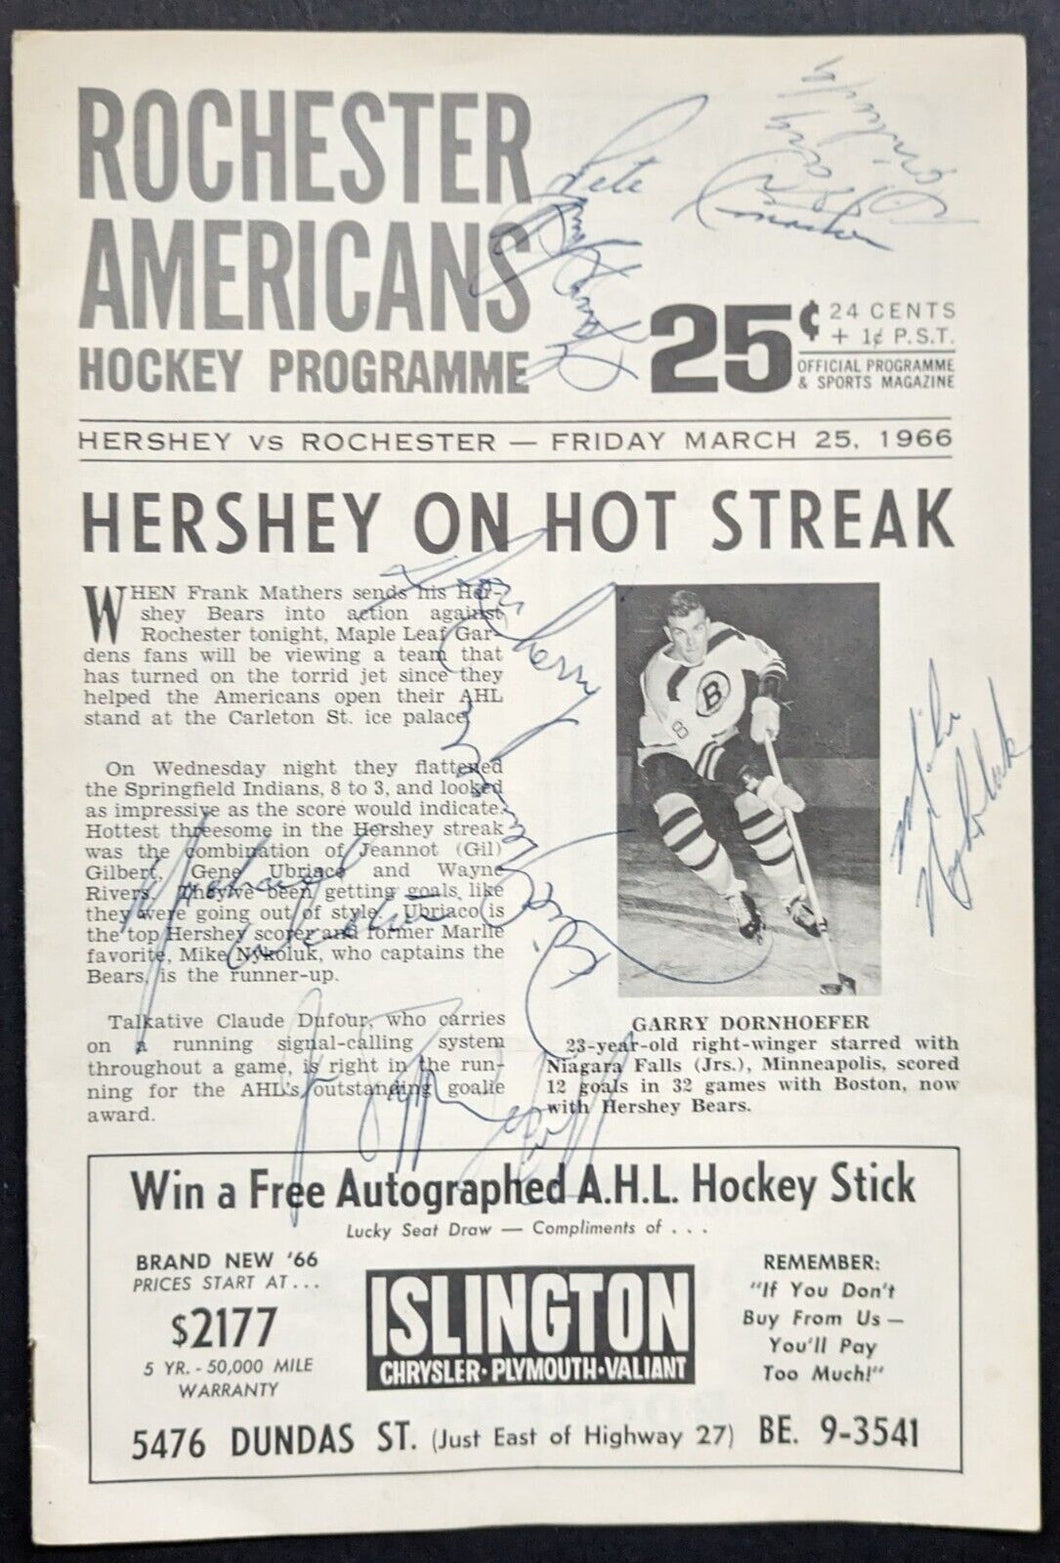 1966 Rochester Americans v. Hershey Hockey Program Multi-Autographed AHL Signed